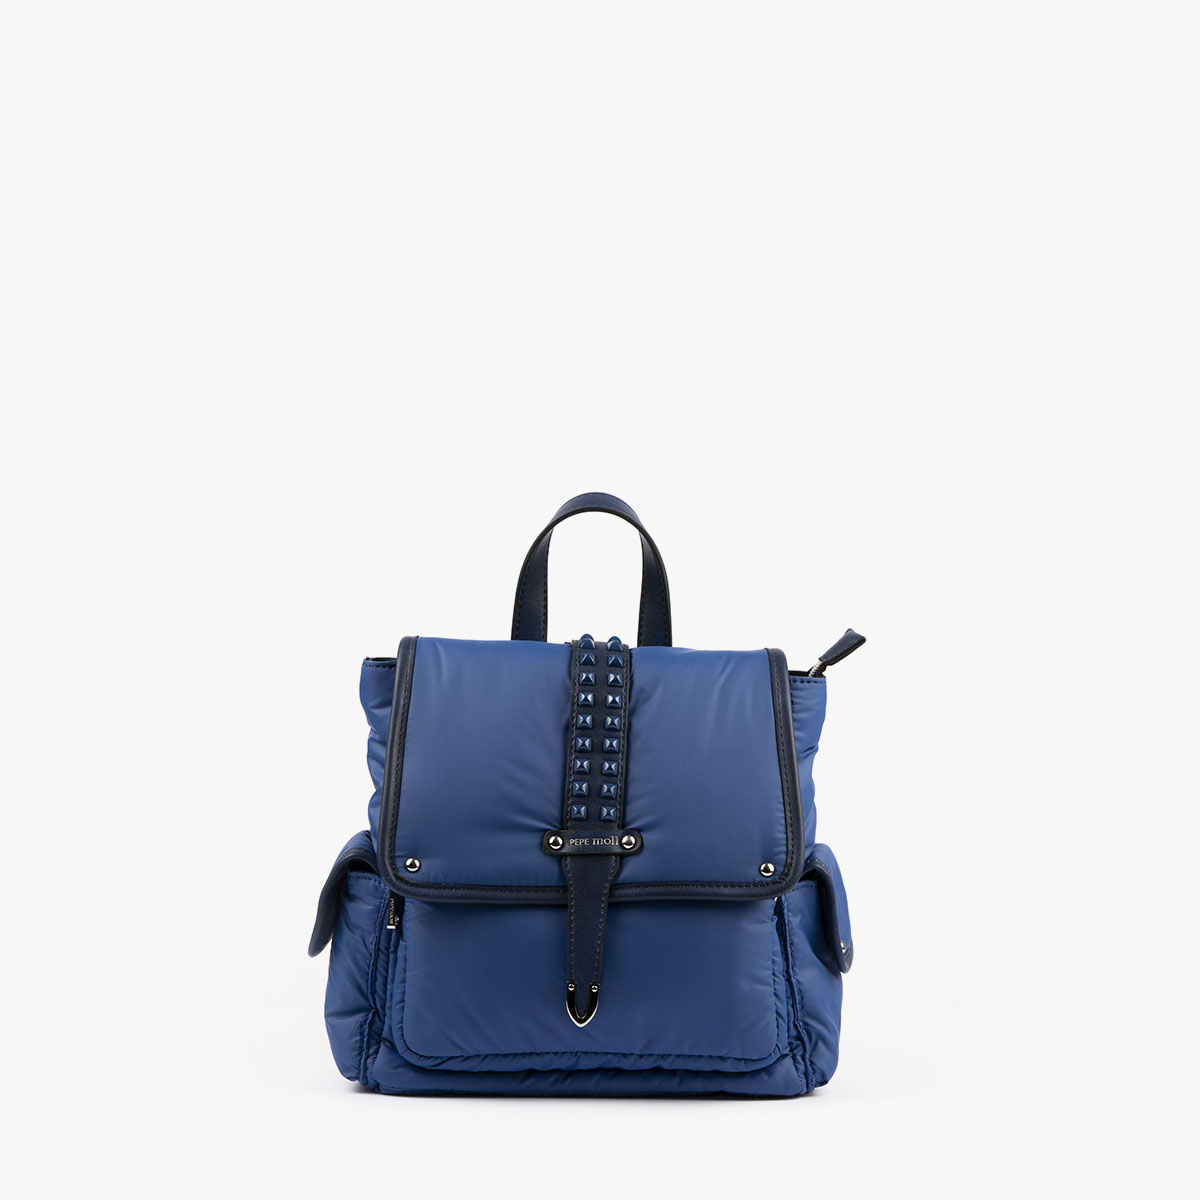 20125 bolso mochila azul